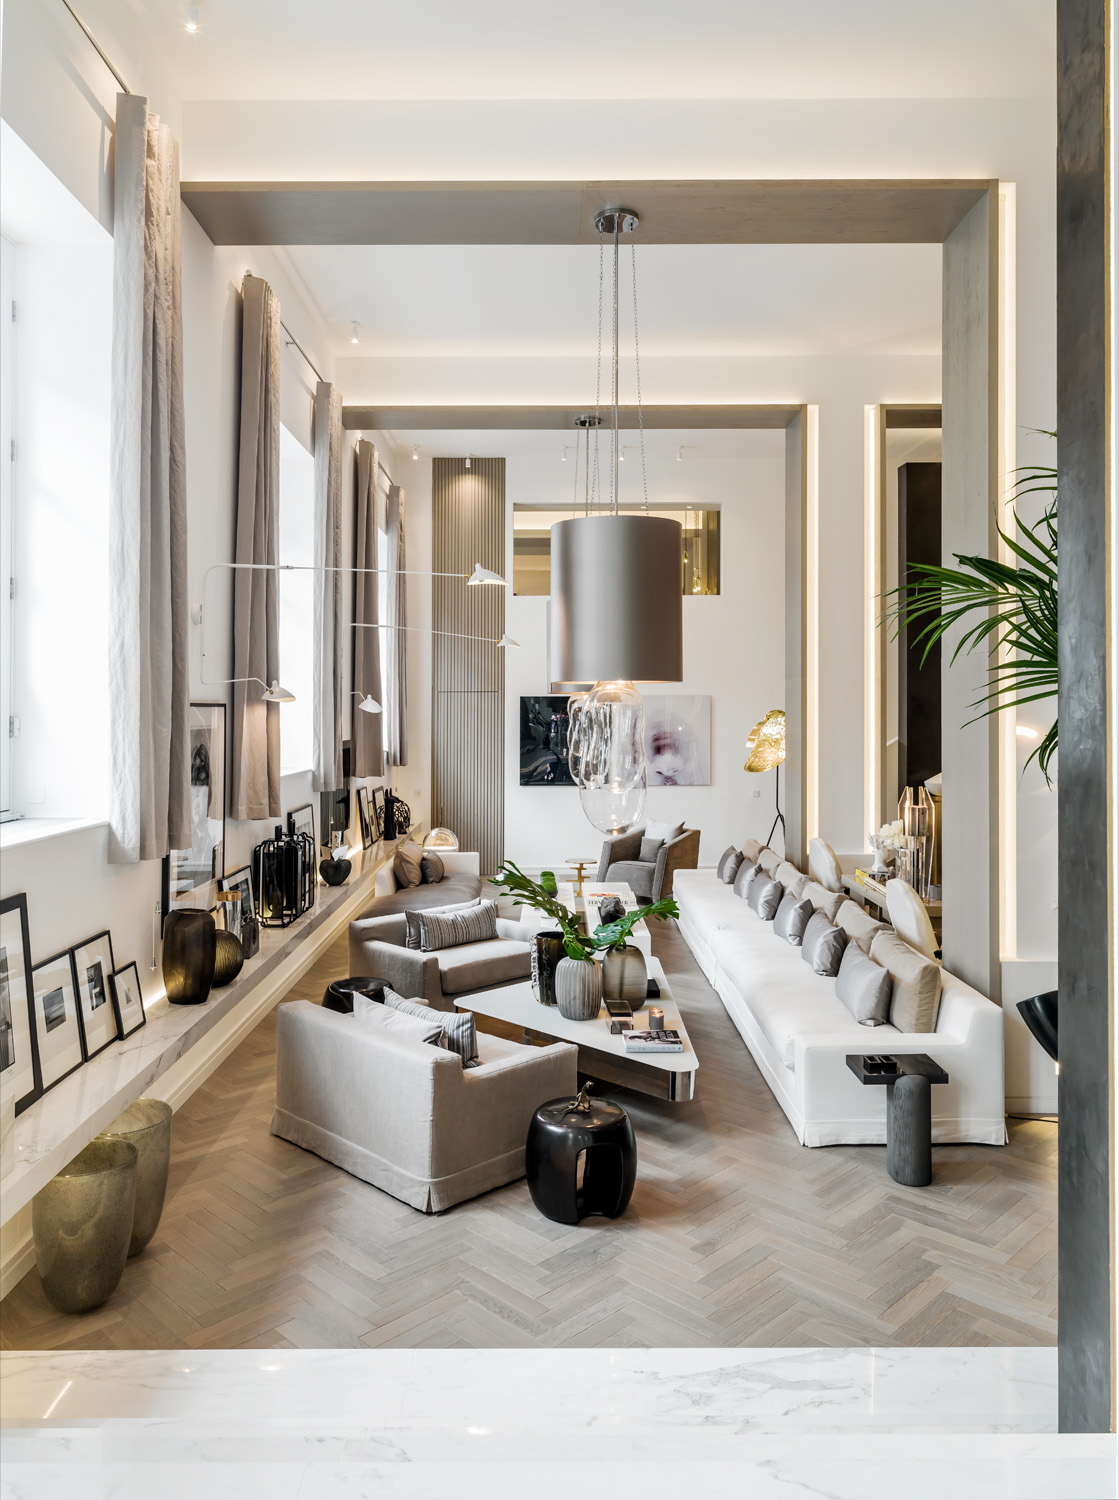 Living interior by Kelly Hoppen - luxury and minimalist interior design studio in London